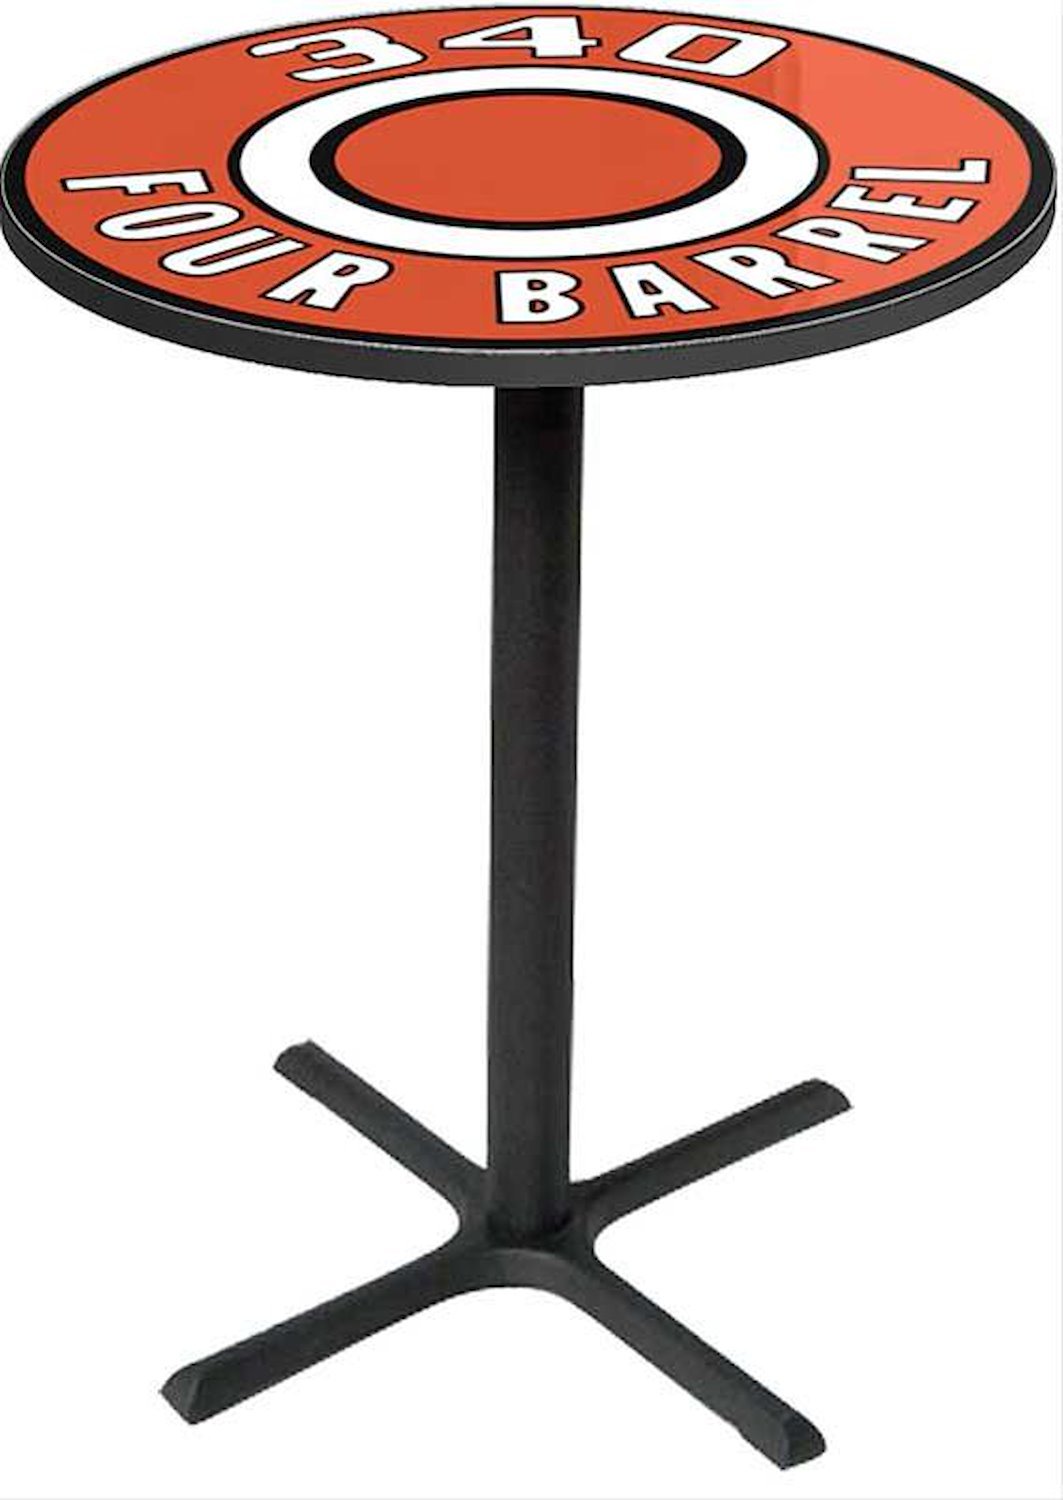 MD671110 Pub Table With Black Base Mopar 340 Four Barrel Logo